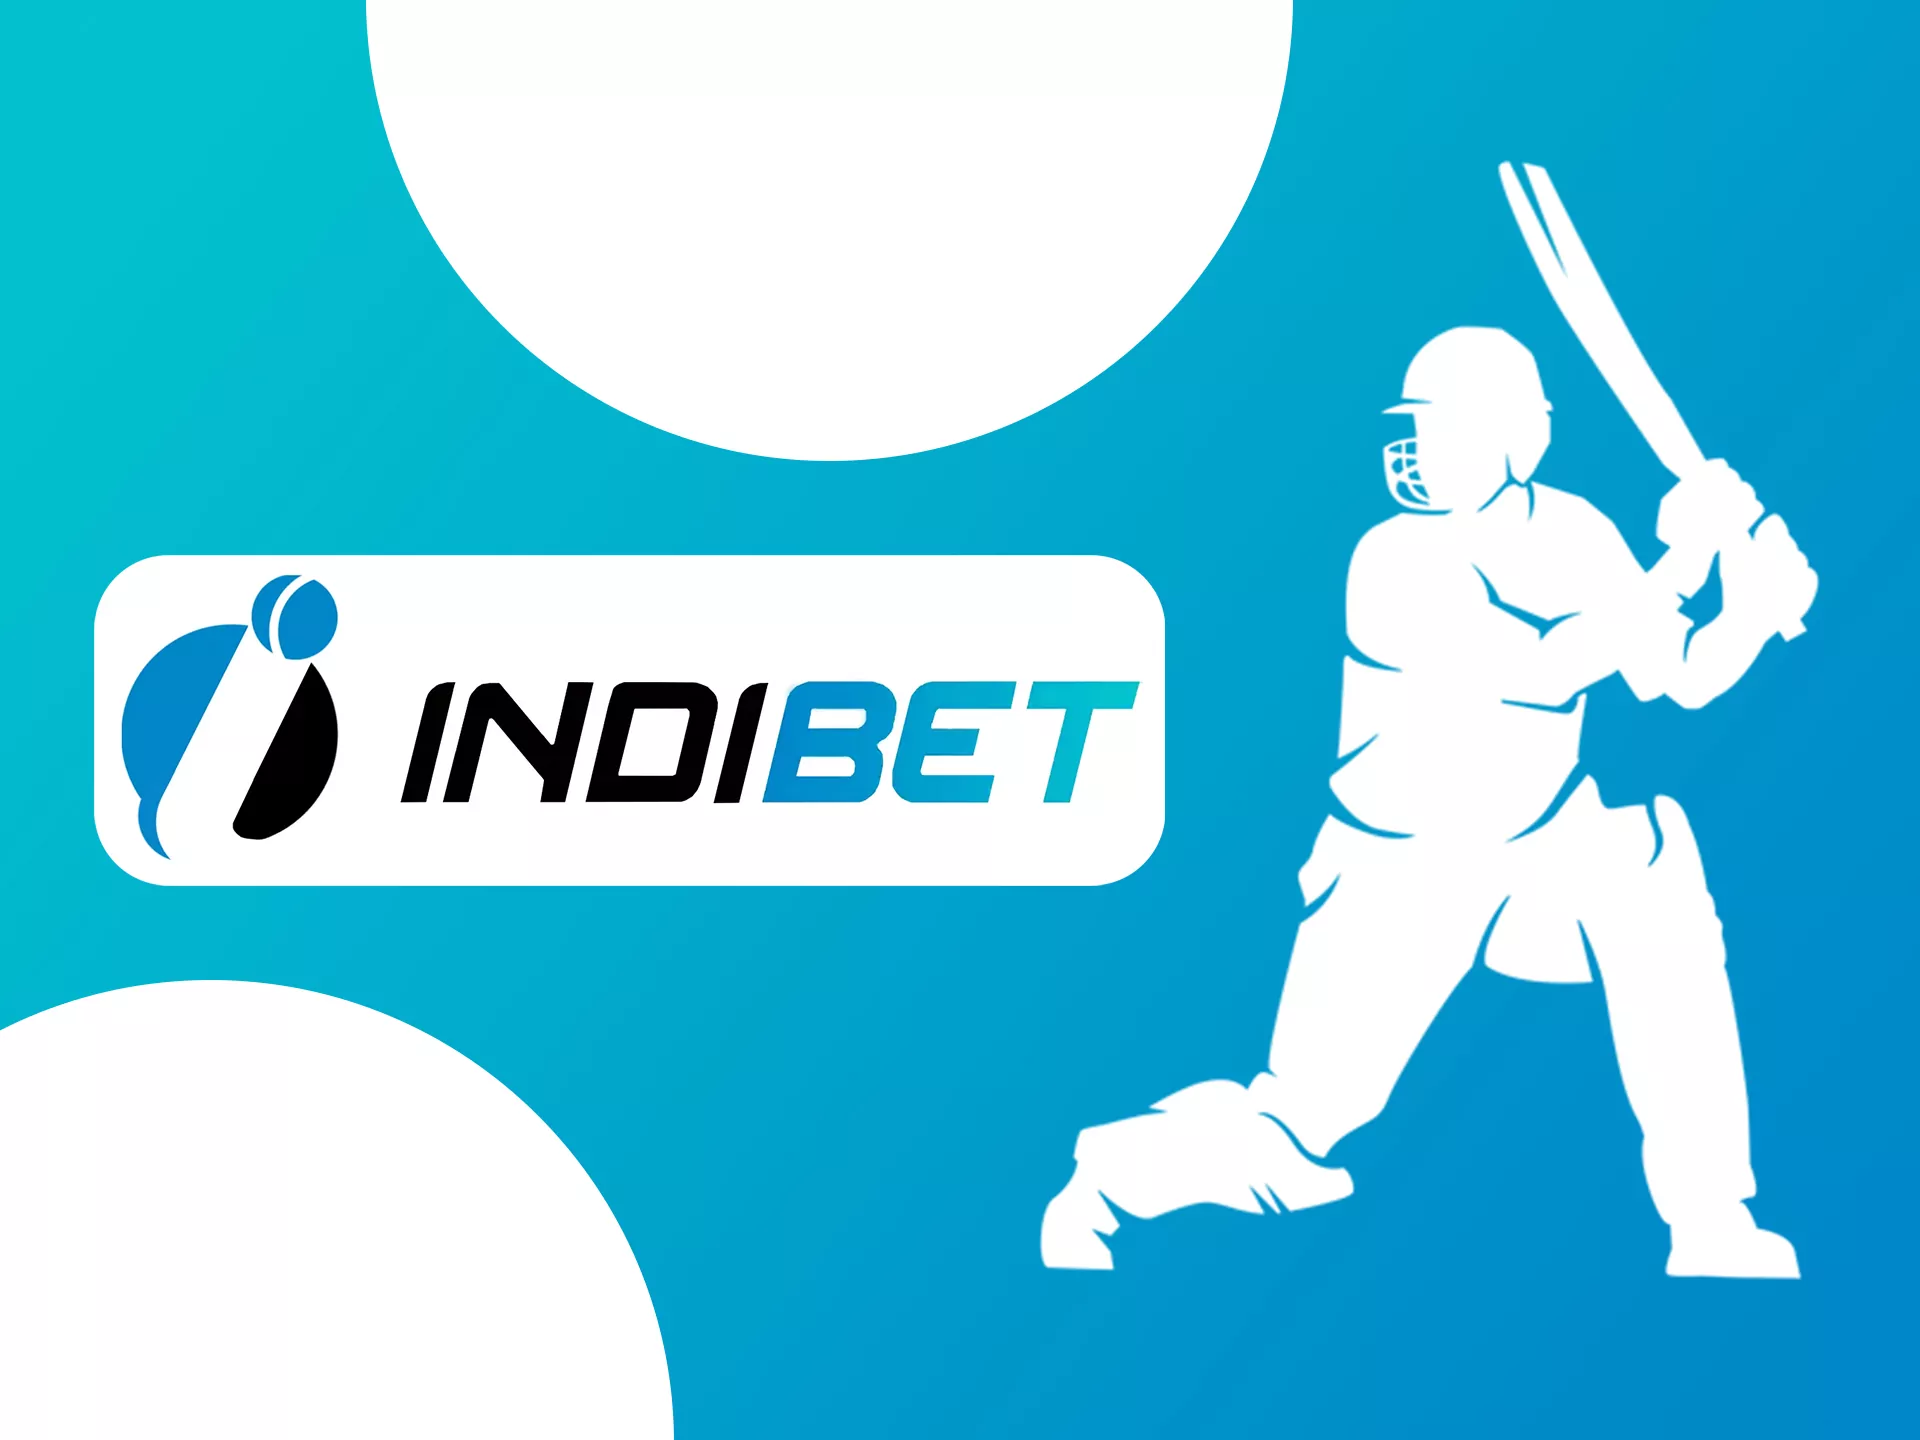 Bet on cricket at Indibet.